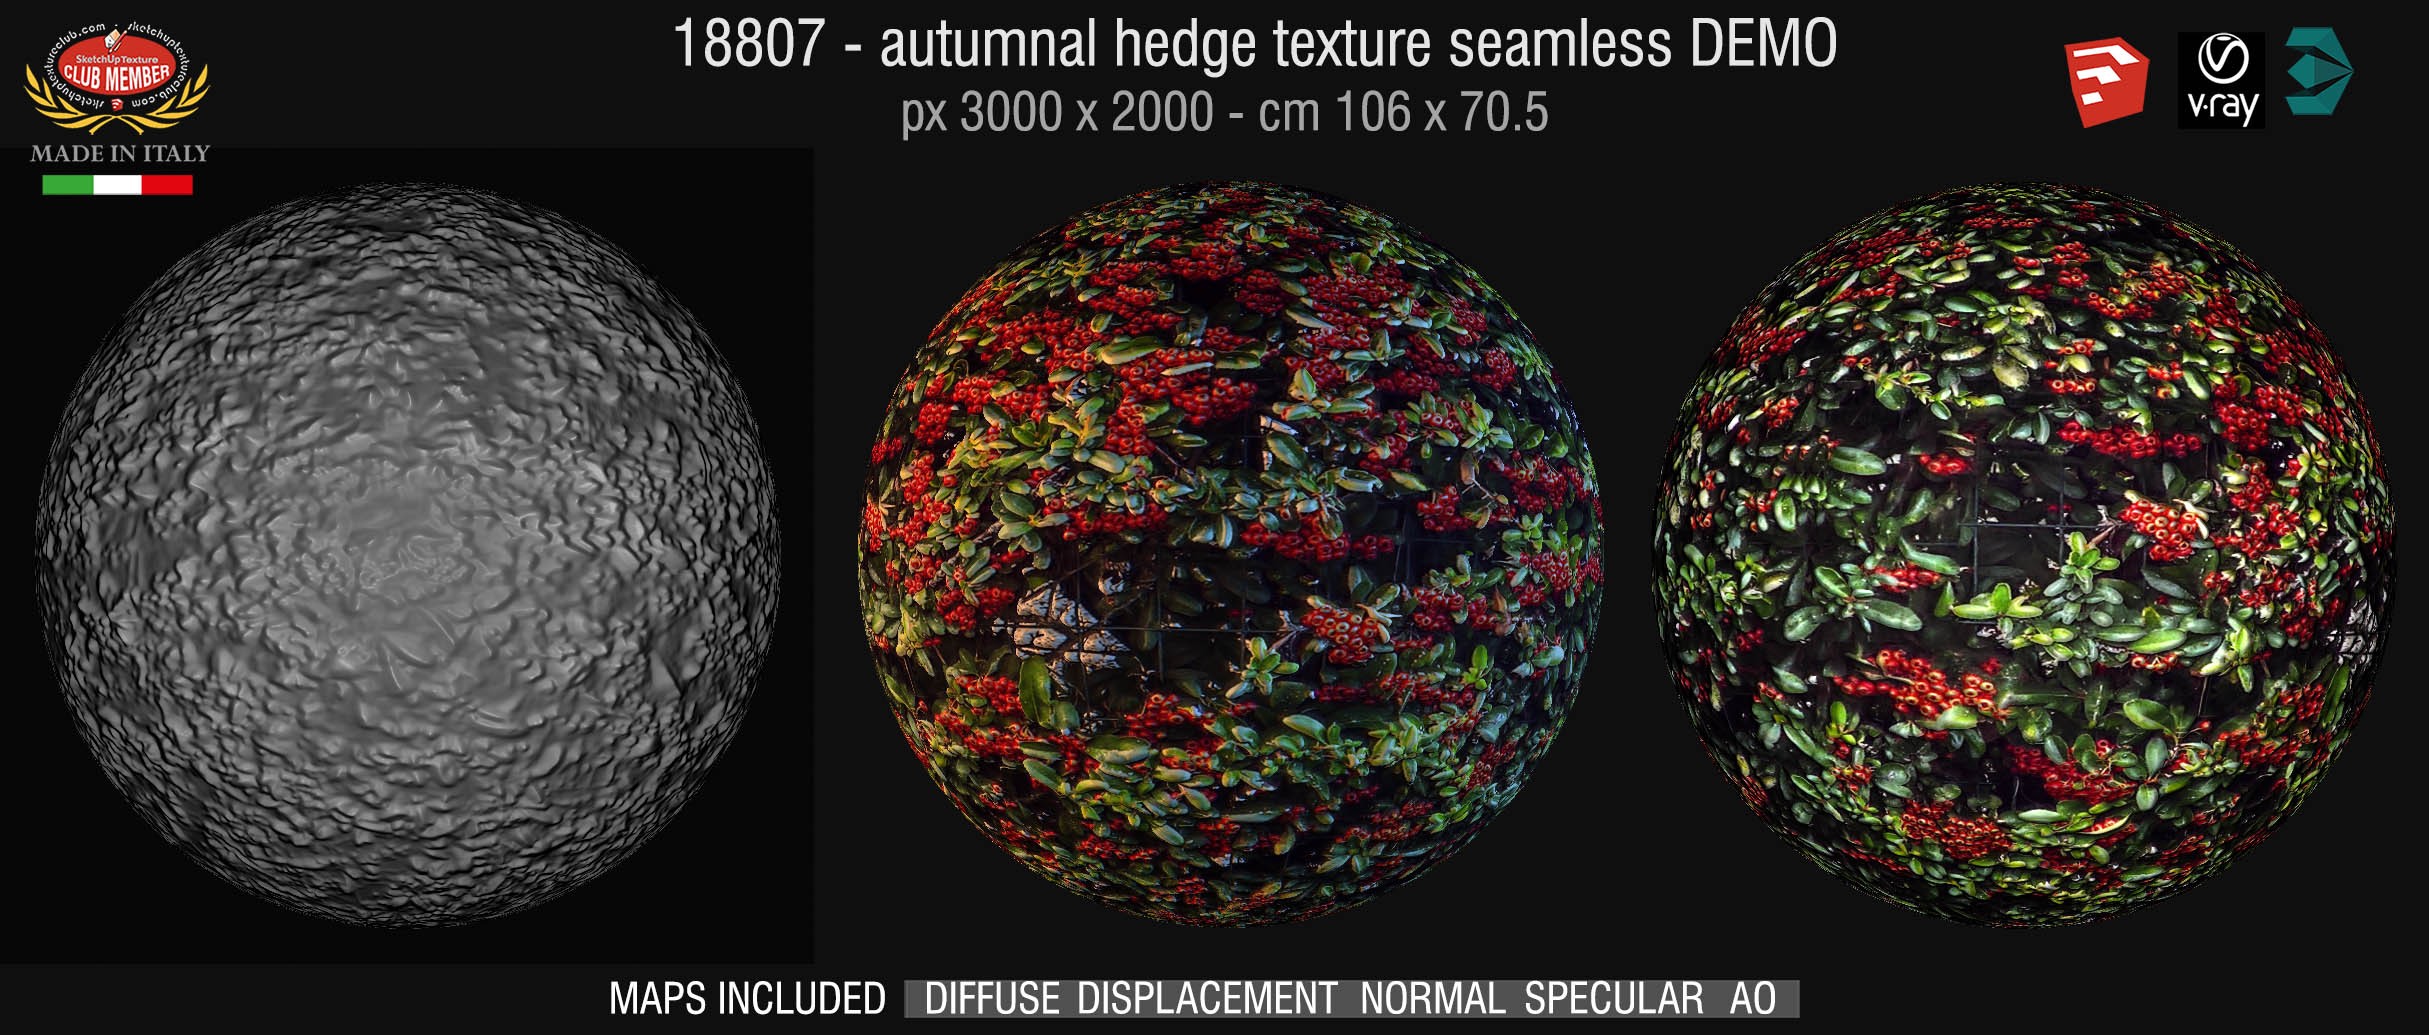 18707 - HR seamless autumnal texture + maps demo